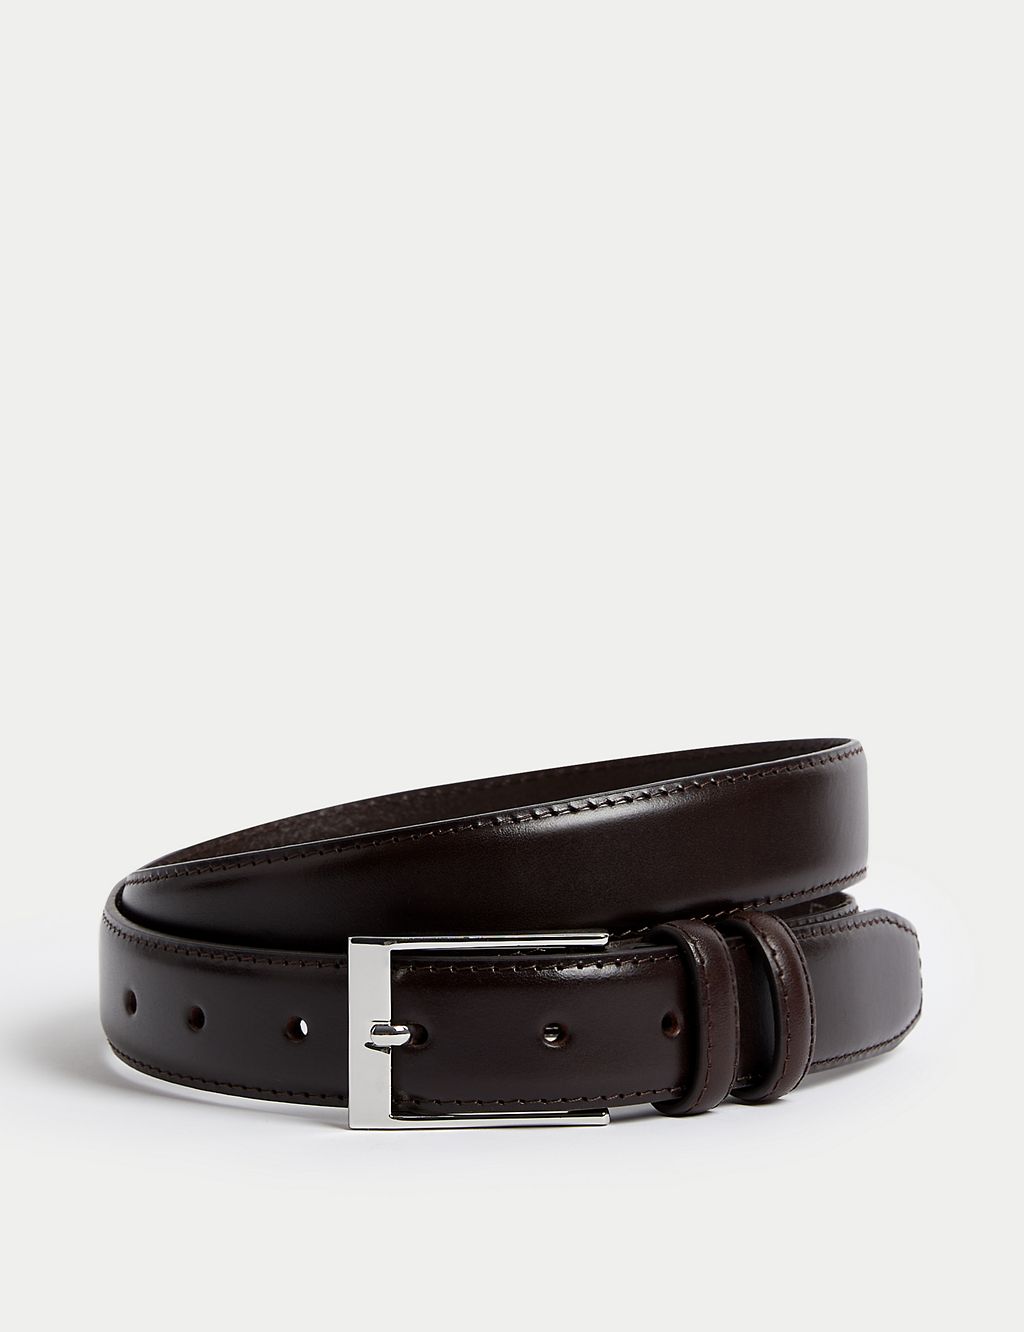 Leather Smart Belt 3 of 3